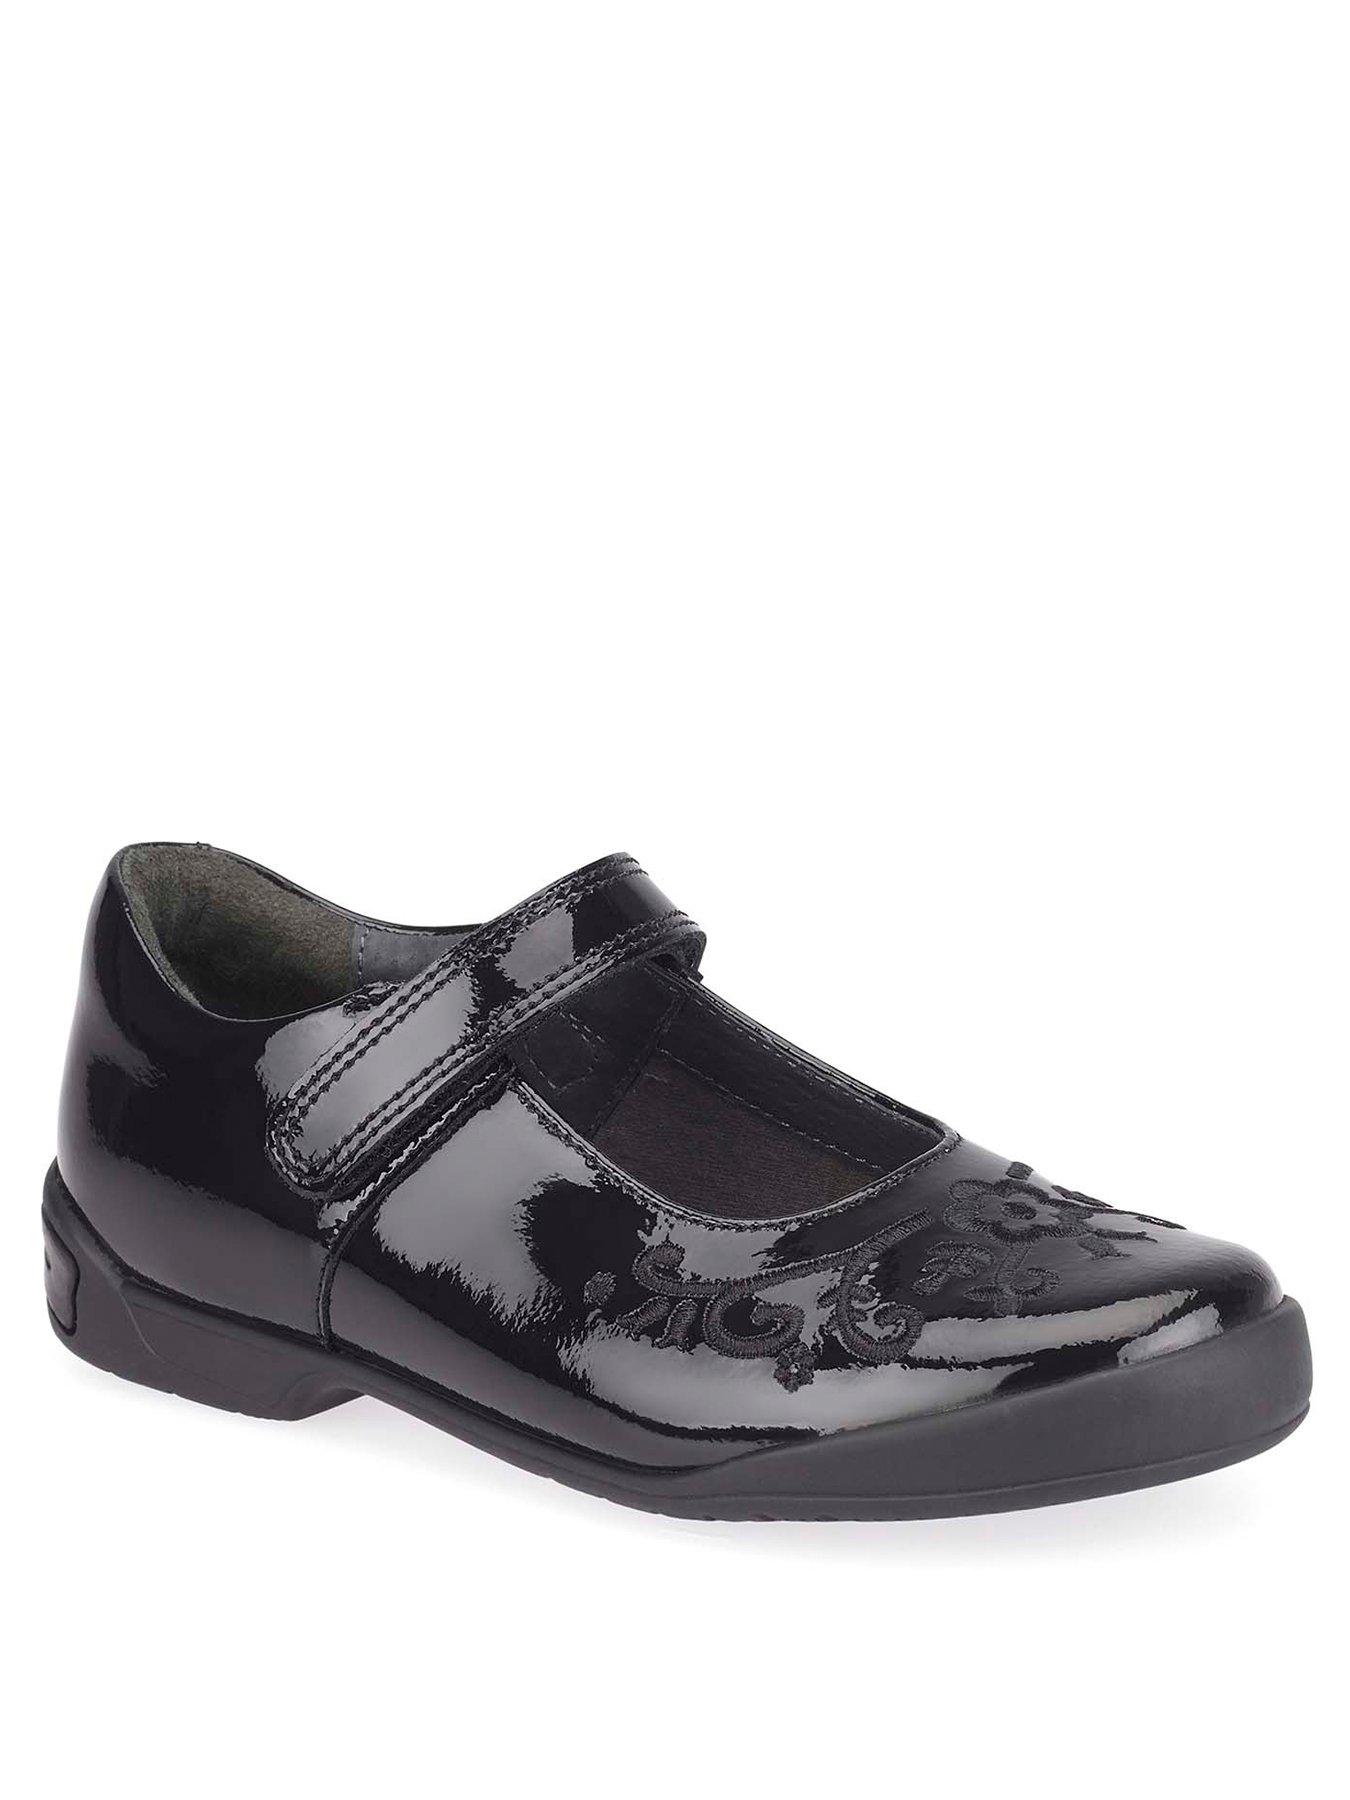 10.5 | E - Narrow Fit | School shoes 